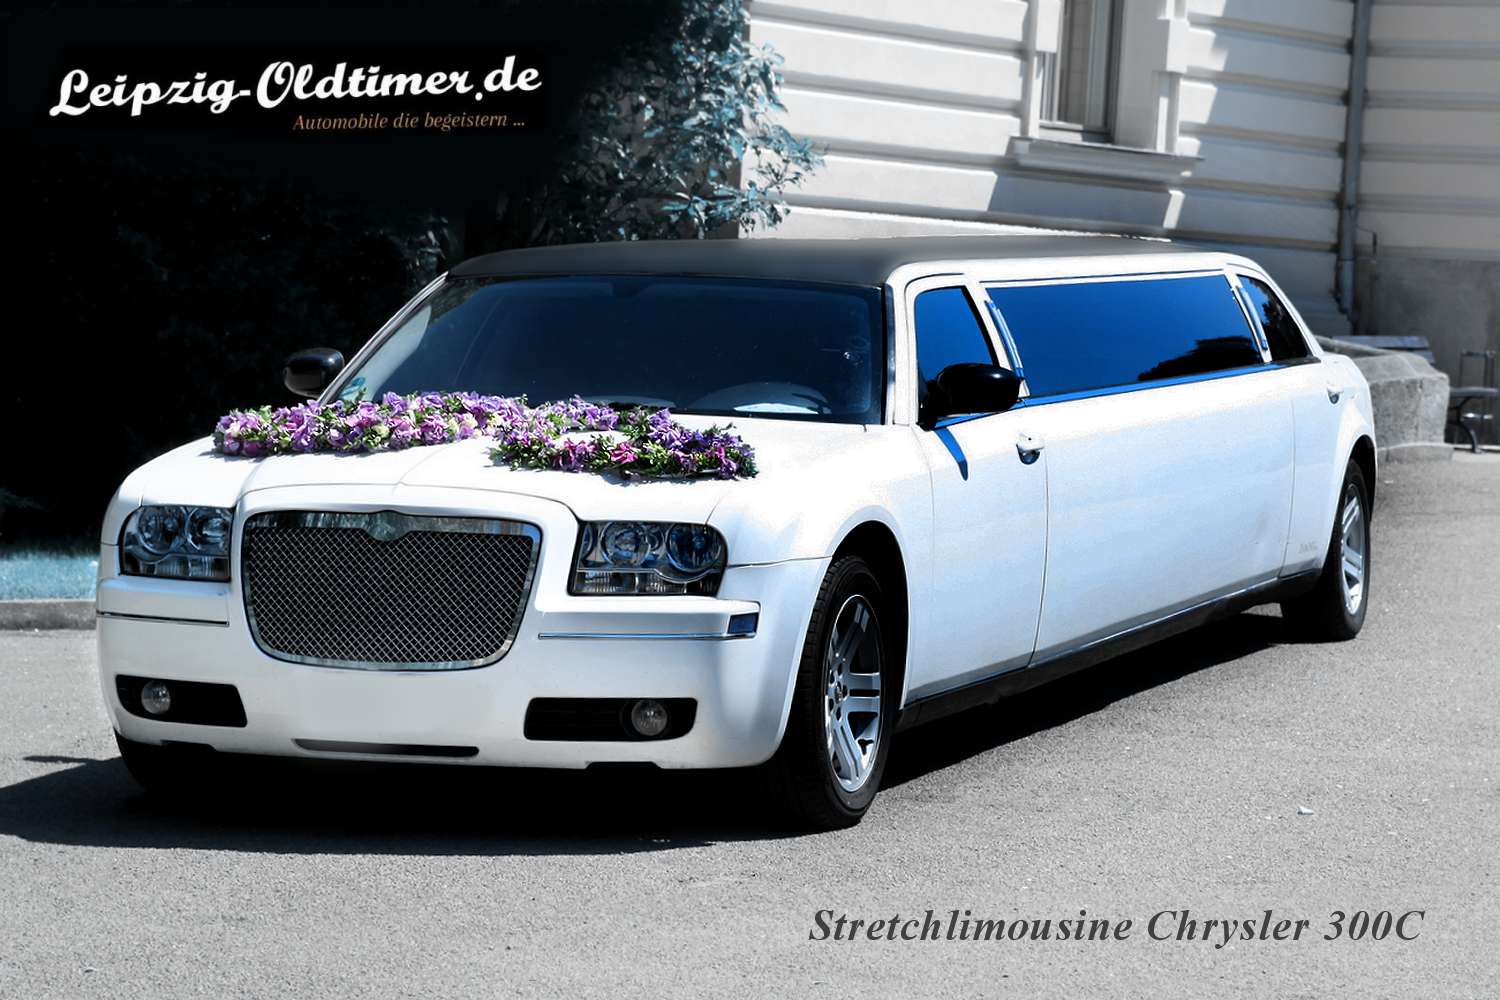 Foto: Chrysler Stretchlimousine am Standesamt Weißes Haus Markkleeberg